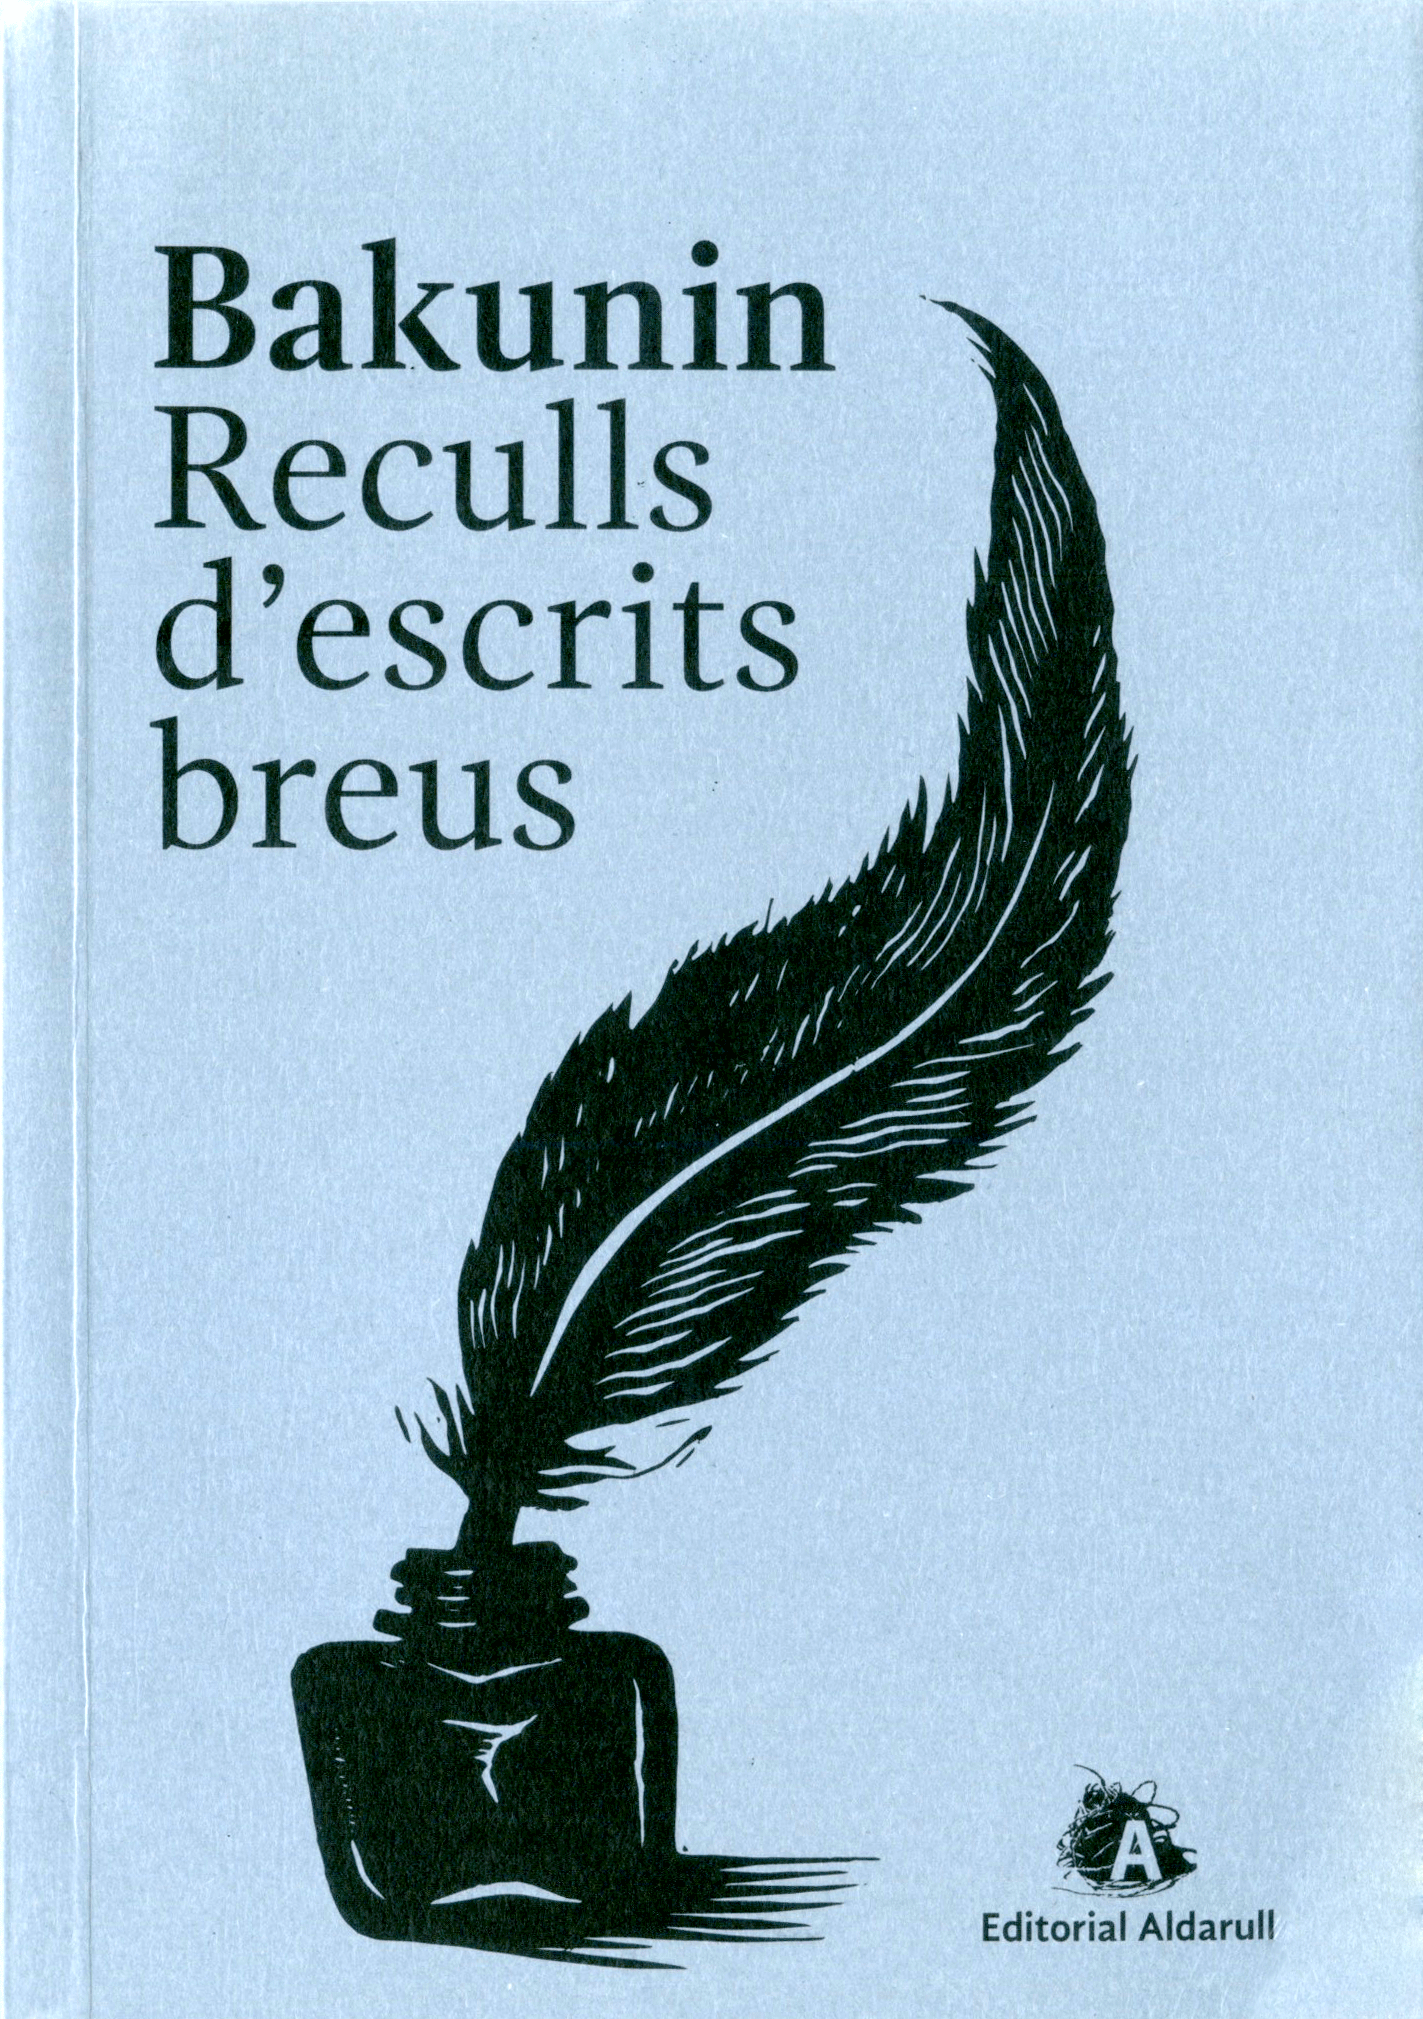 Bakunin: Recull d'escrits breus